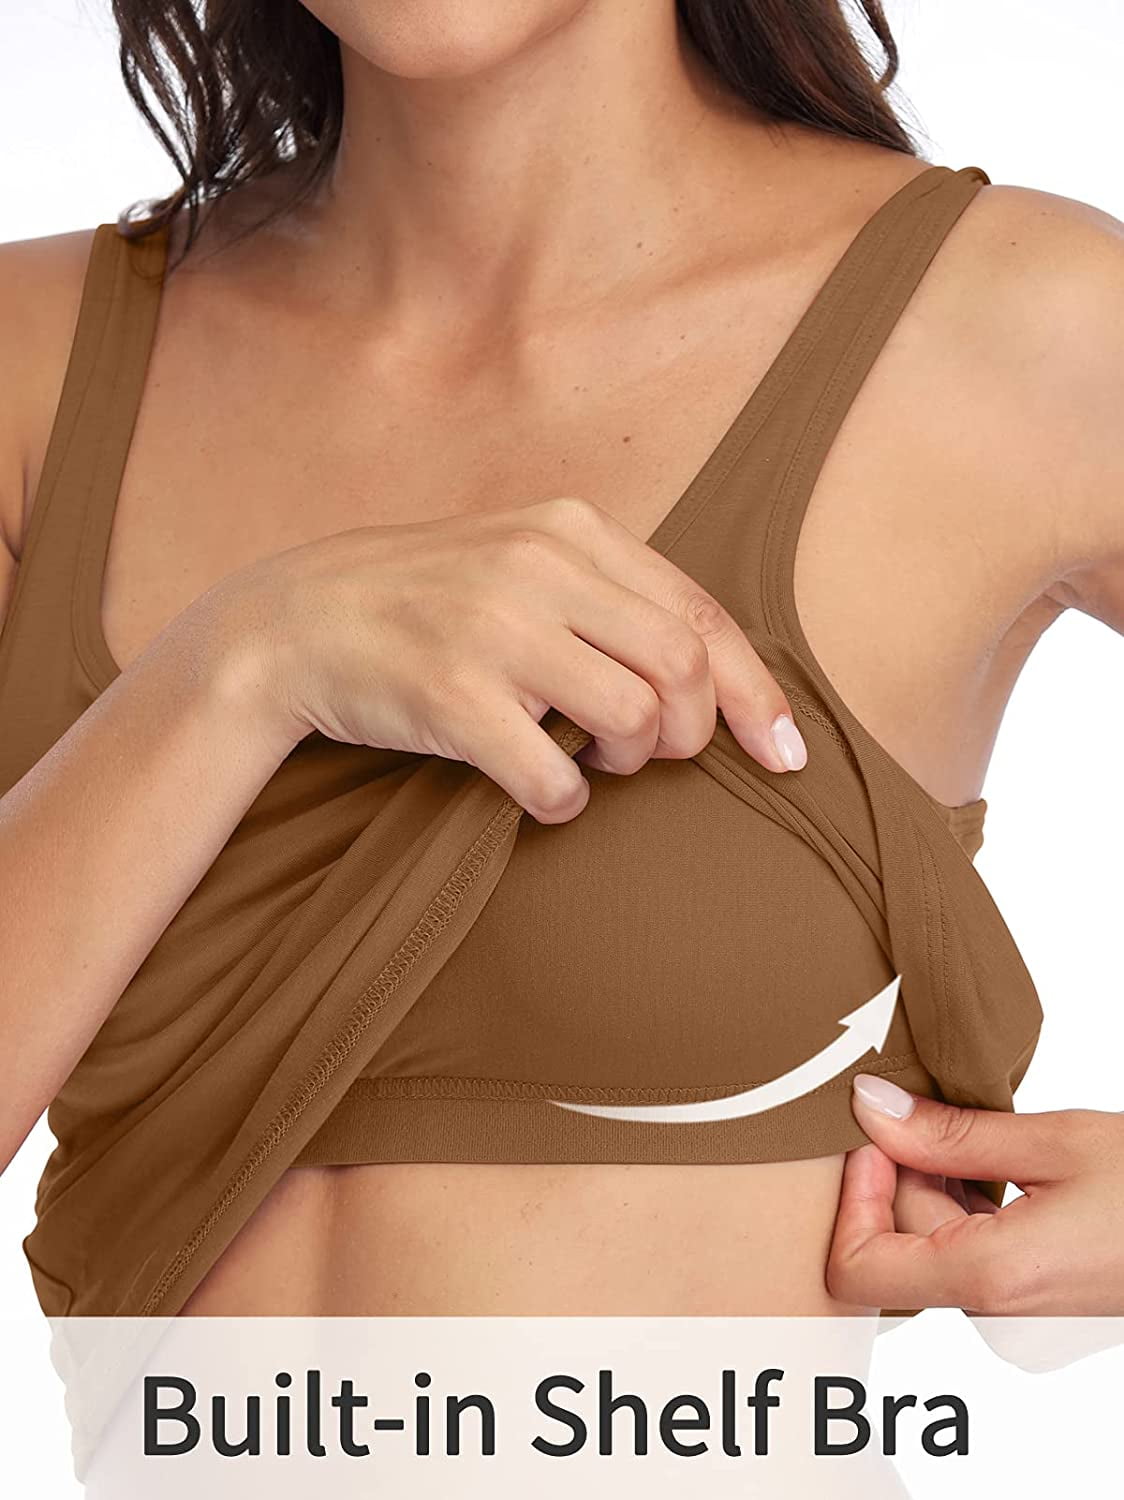 Women's Camisole Cotton Tank Top with Shelf Bra Adjustable Wide Strap Basic  Undershirt 